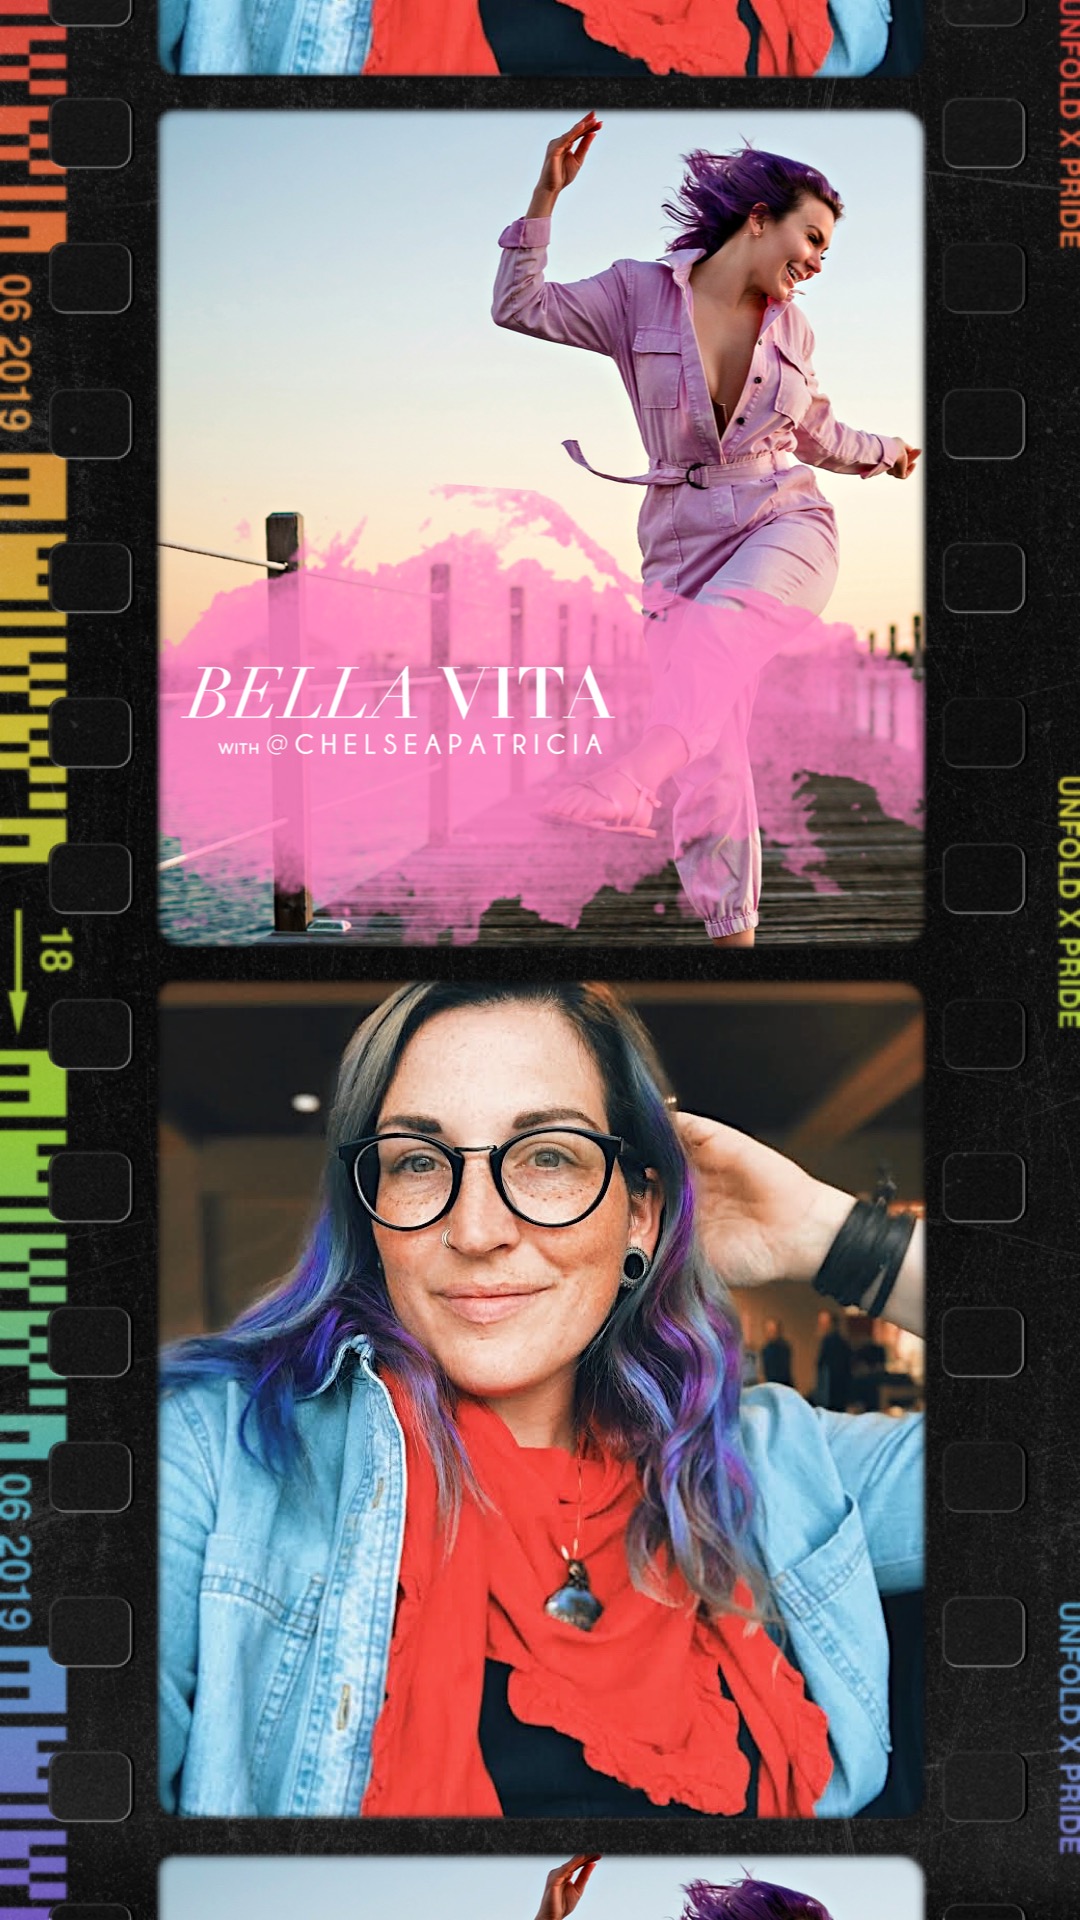 Bella Vita with Chelsea Patricia Instagram Live Series